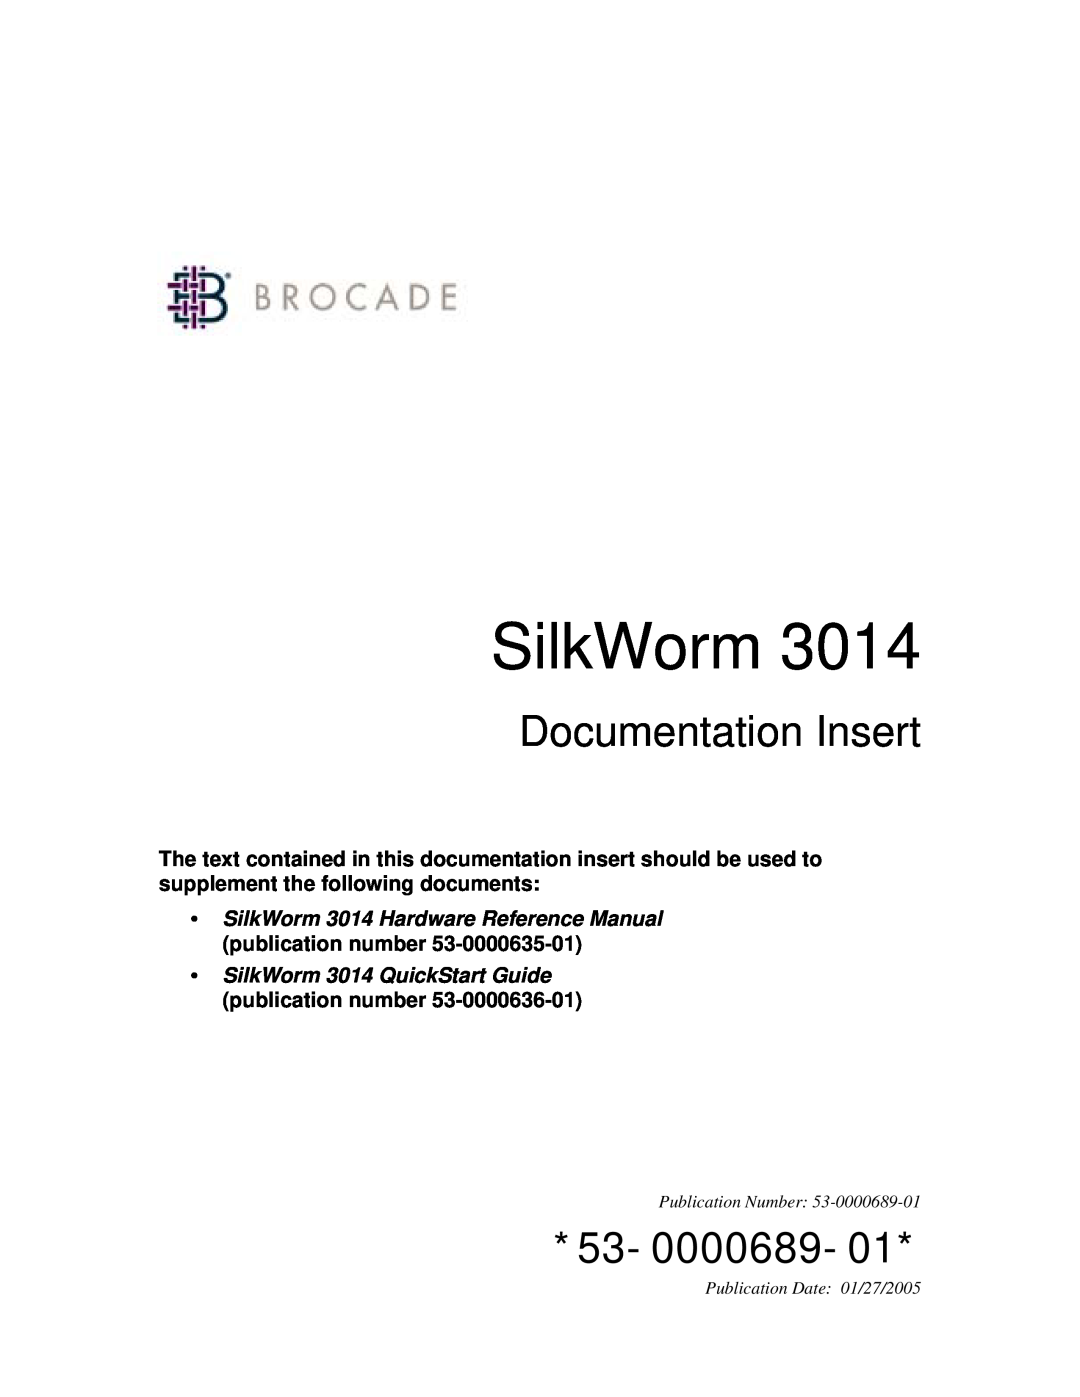 Brocade Communications Systems 3014 quick start SilkWorm, Documentation Insert, 53-0000689-01, Publication Number 